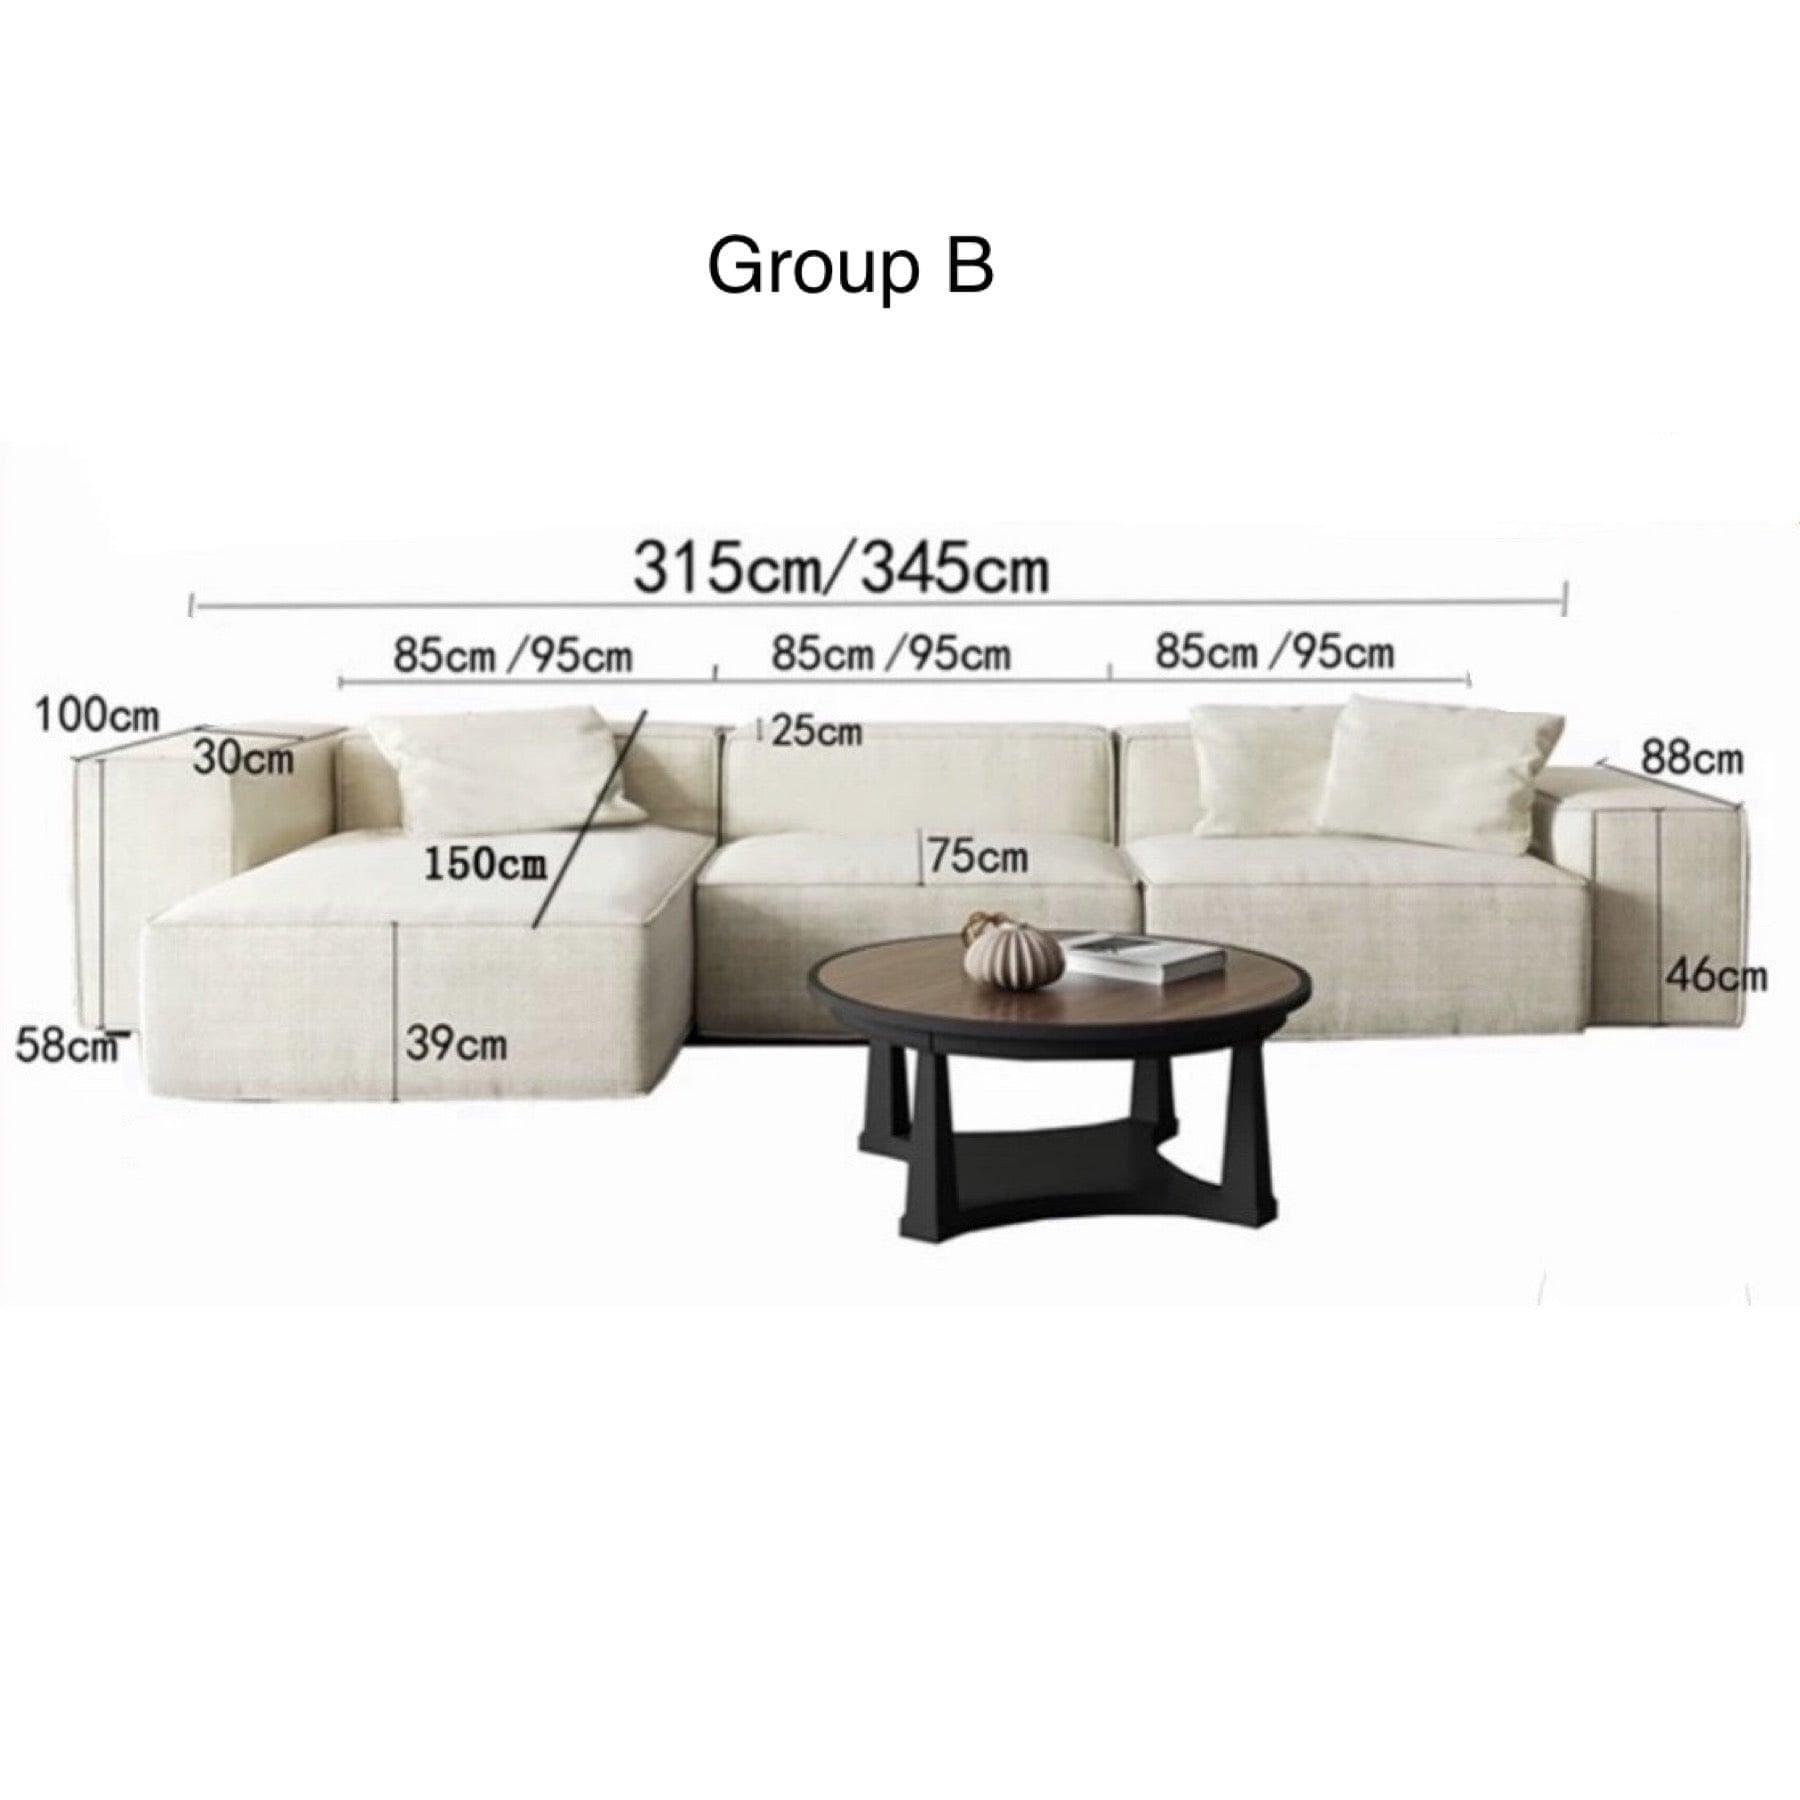 Home Atelier Cotton Linen Fabric / Group B/ Length 315cm / Cream Caprice Sectional Island L-shape Sofa